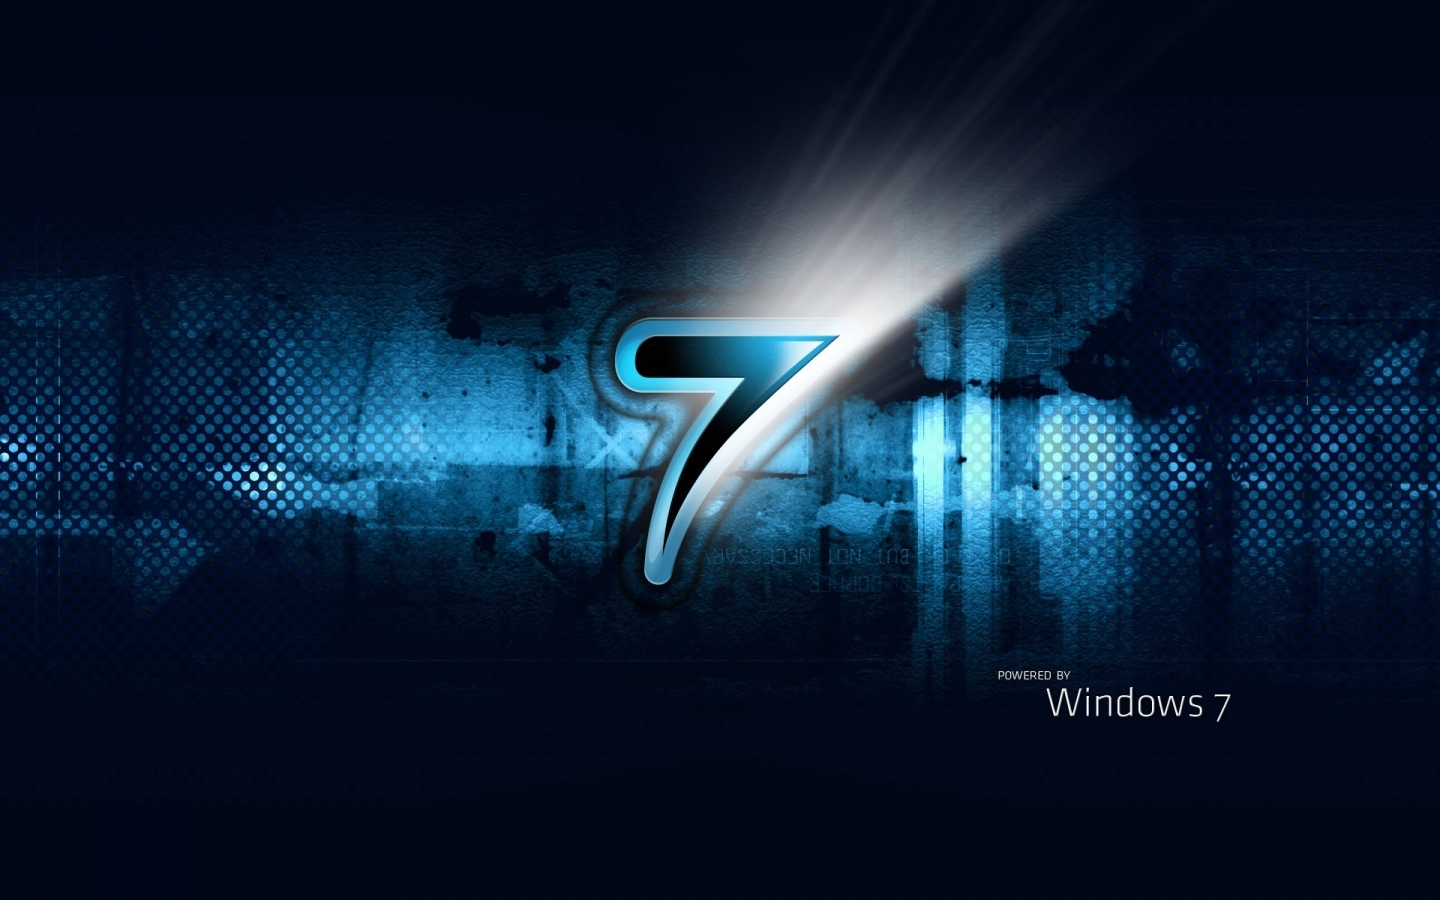 Superb Windows 7 for 1440 x 900 widescreen resolution